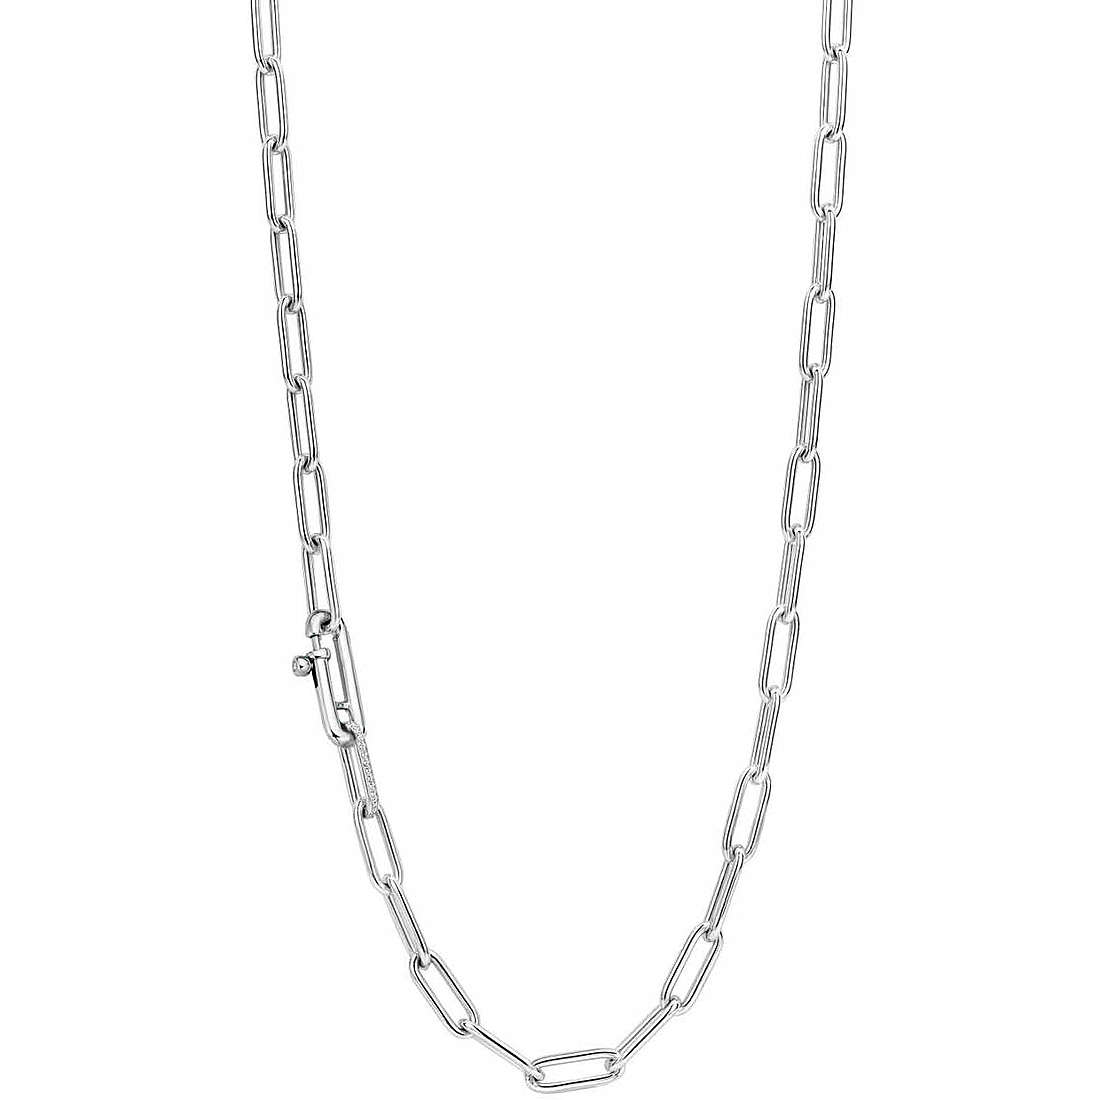 necklace woman jewellery TI SENTO MILANO 3947ZI/80